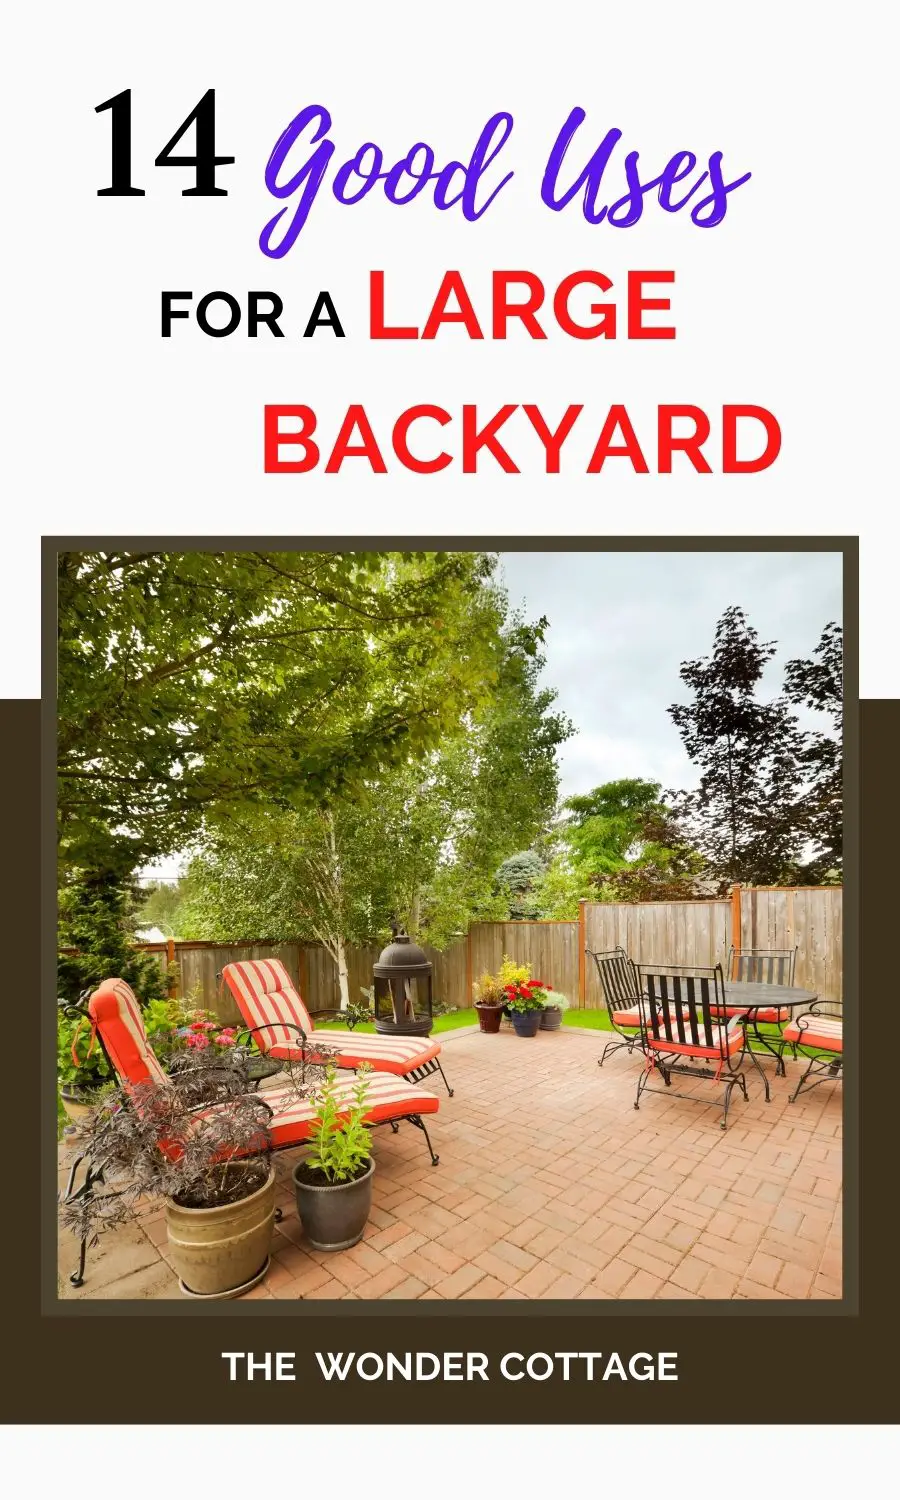 14 good uses for a large backyard